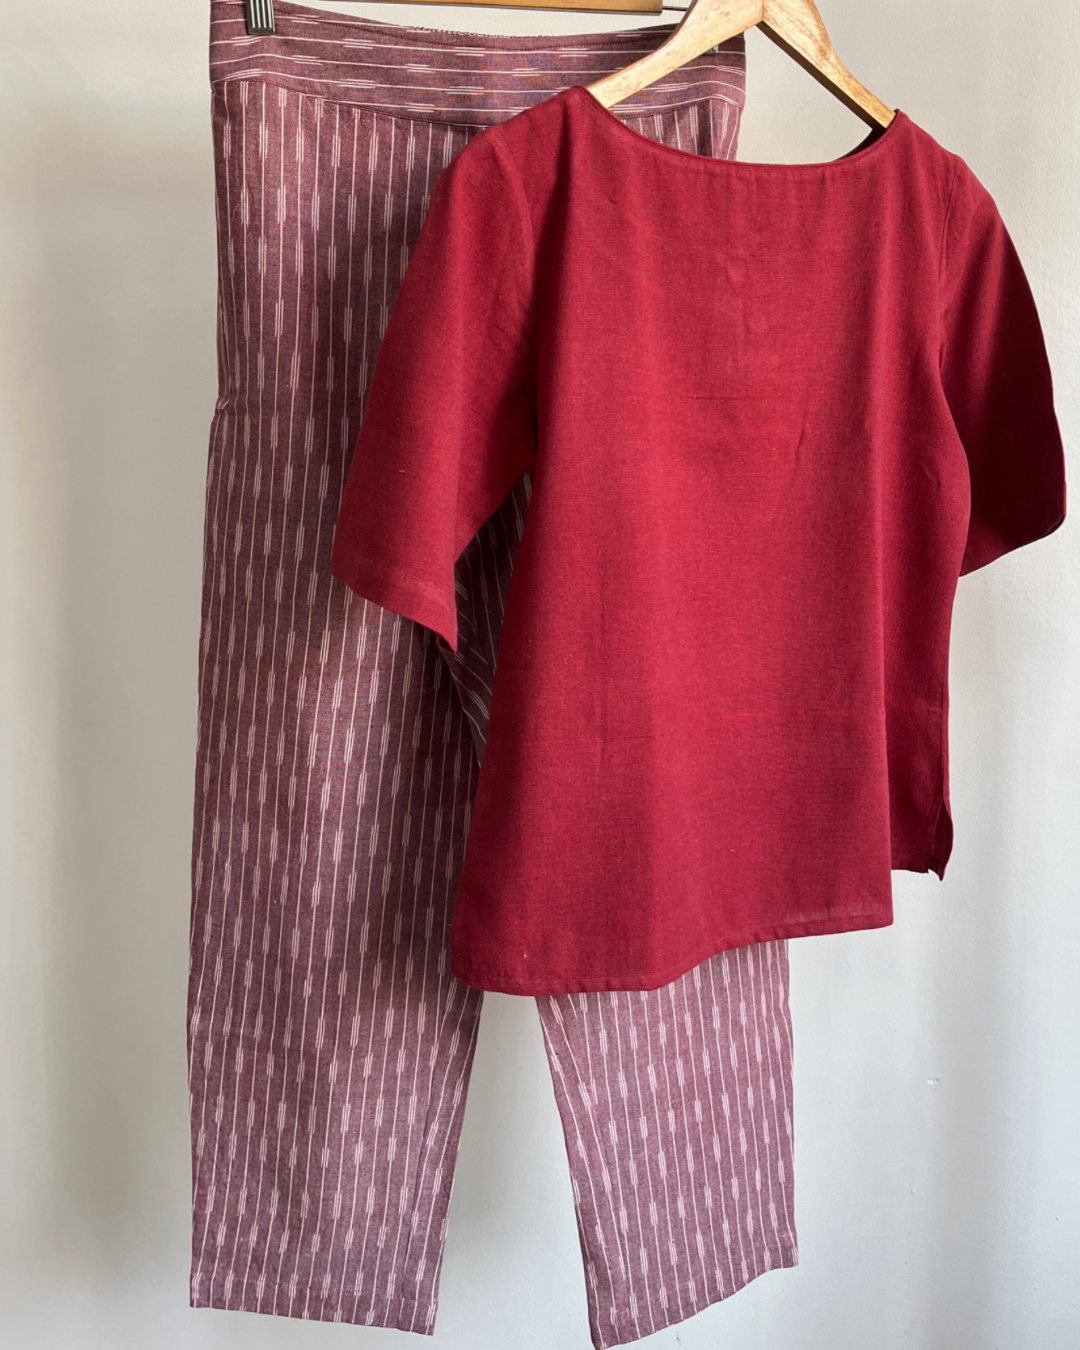 Uttara - Ruby red cotton